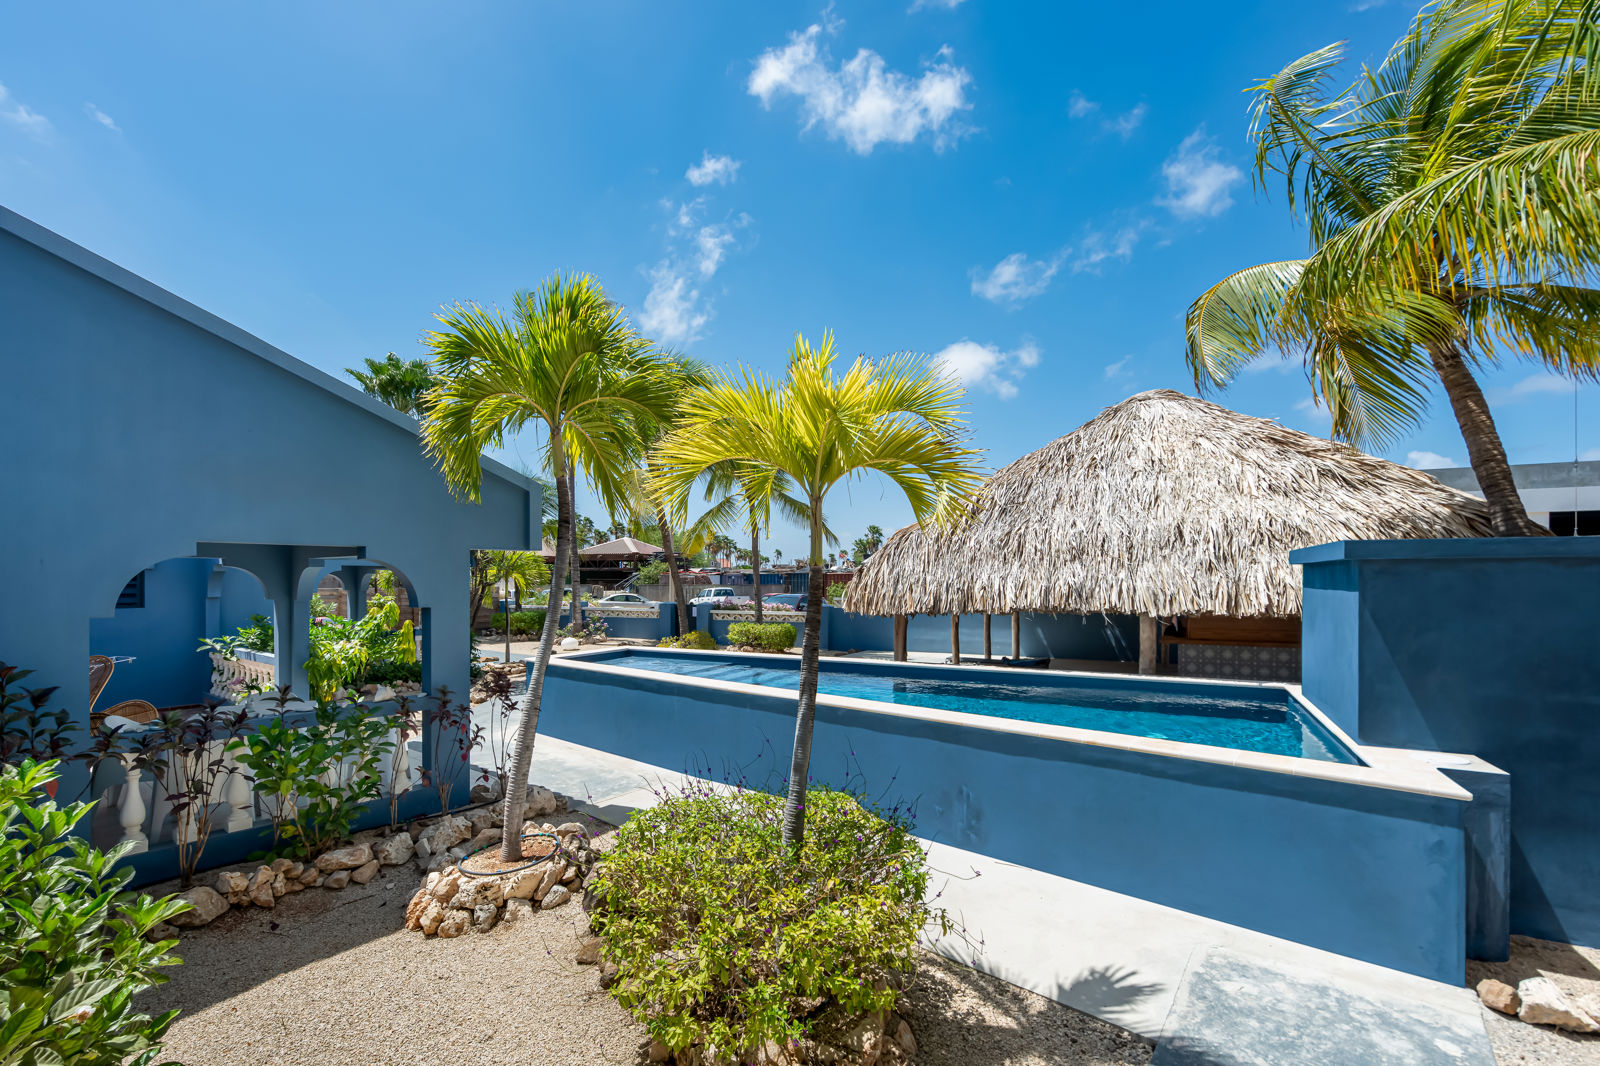 Blue Bonaire Resort